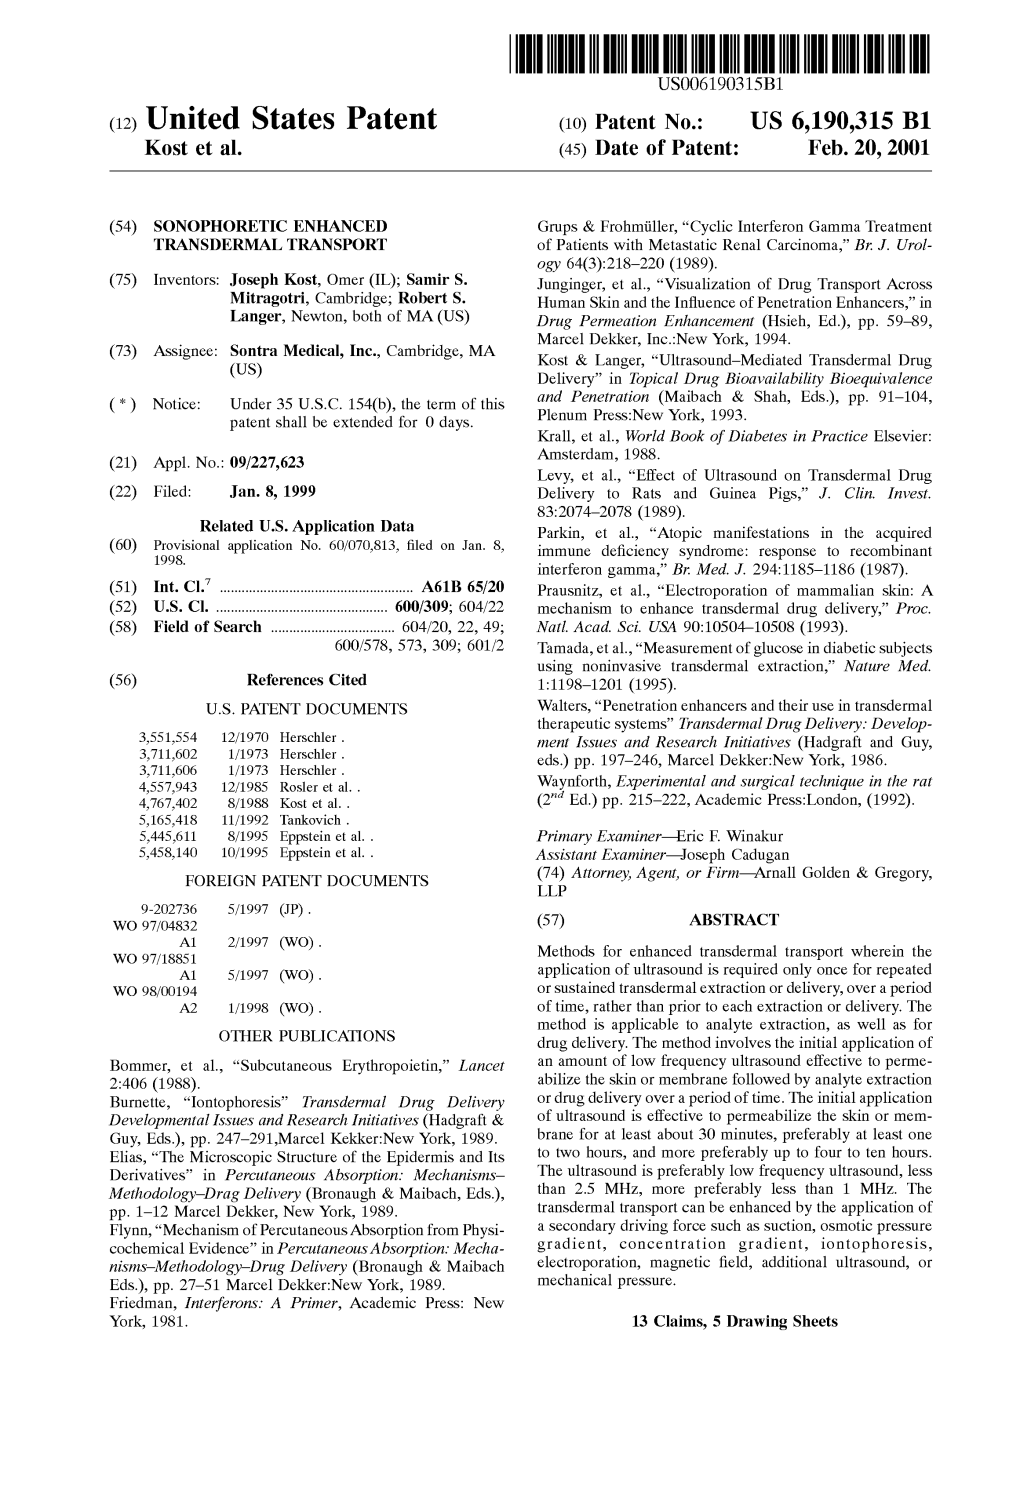 (12) United States Patent (10) Patent No.: US 6,190,315 B1 Kost Et Al